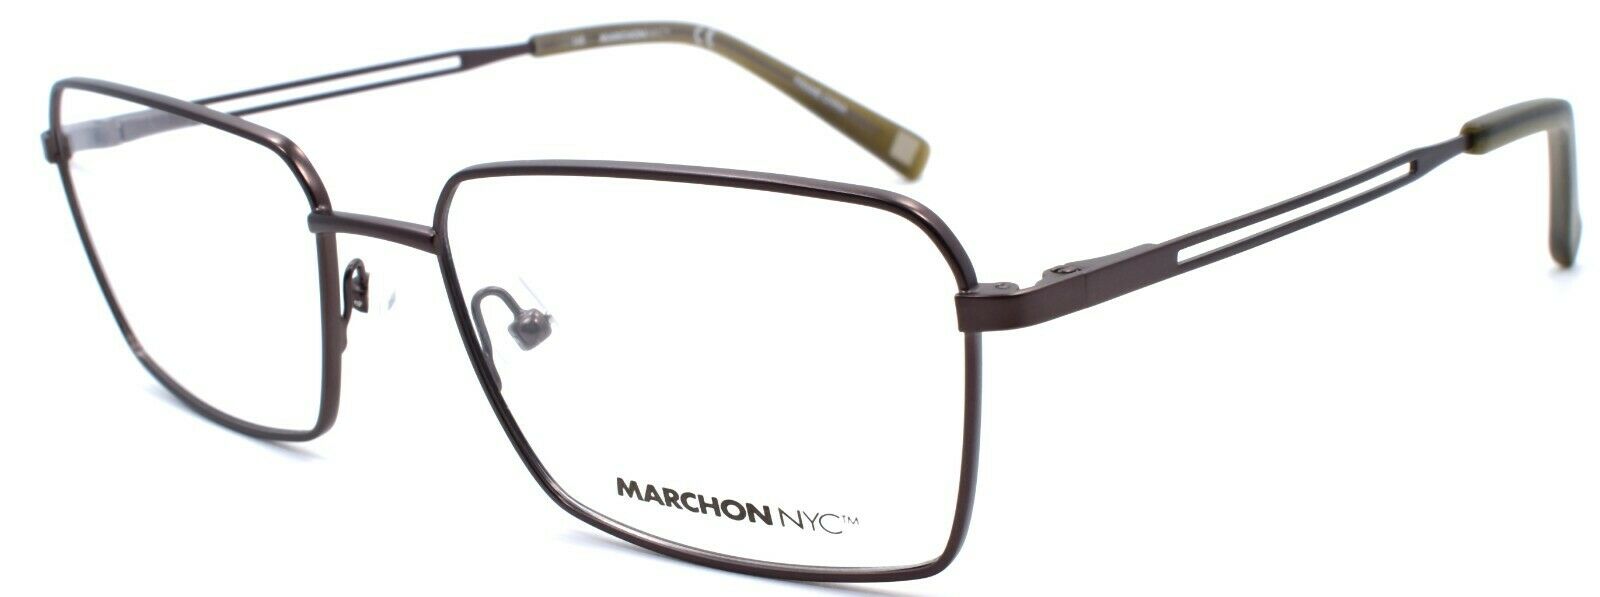 1-Marchon M2010 033 Men's Eyeglasses Frames 55-17-145 Gunmetal-886895447089-IKSpecs